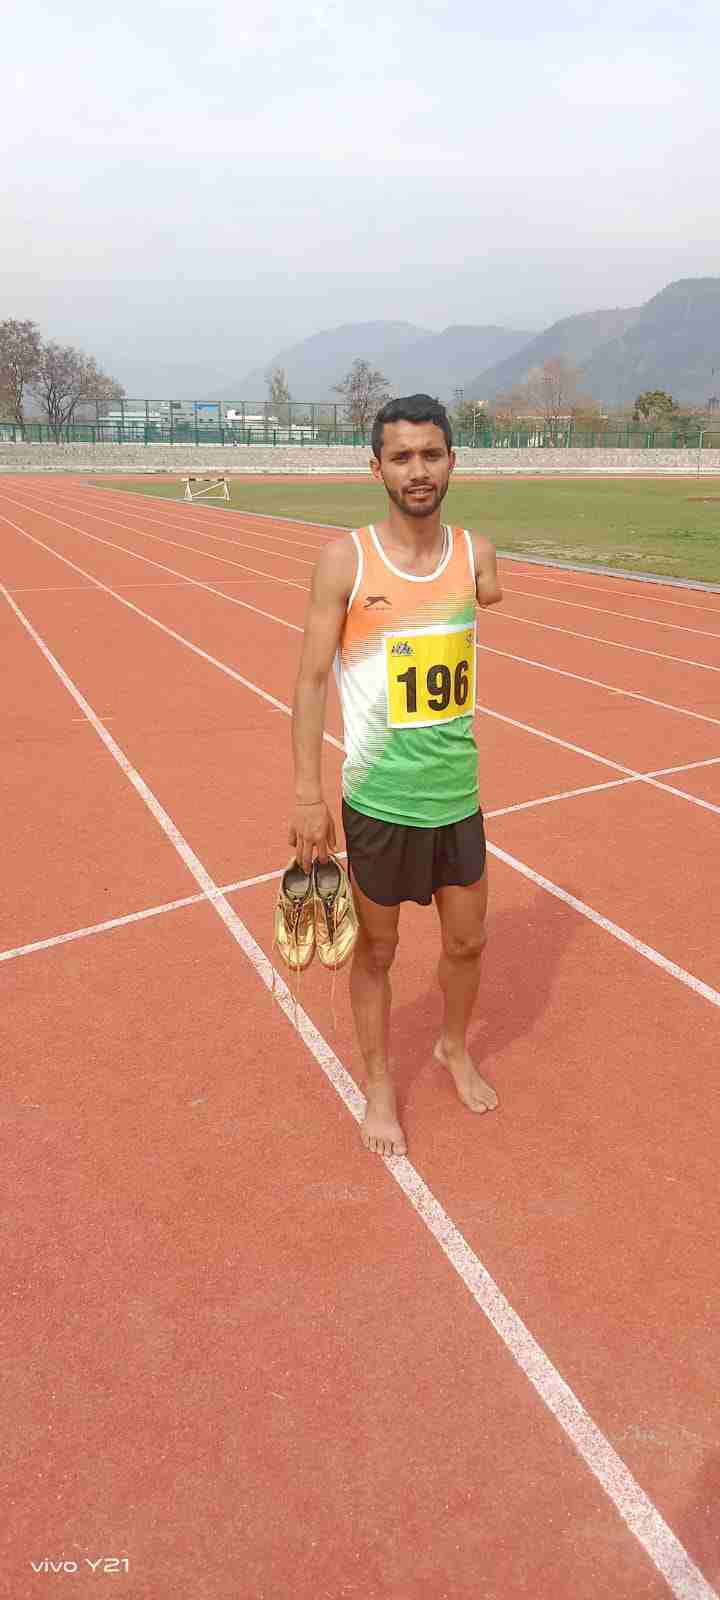 Uttarakhand news: Durga Dutt ruwali of okhalkanda nainital won 2 gold medals in Para Athletics Championship. 